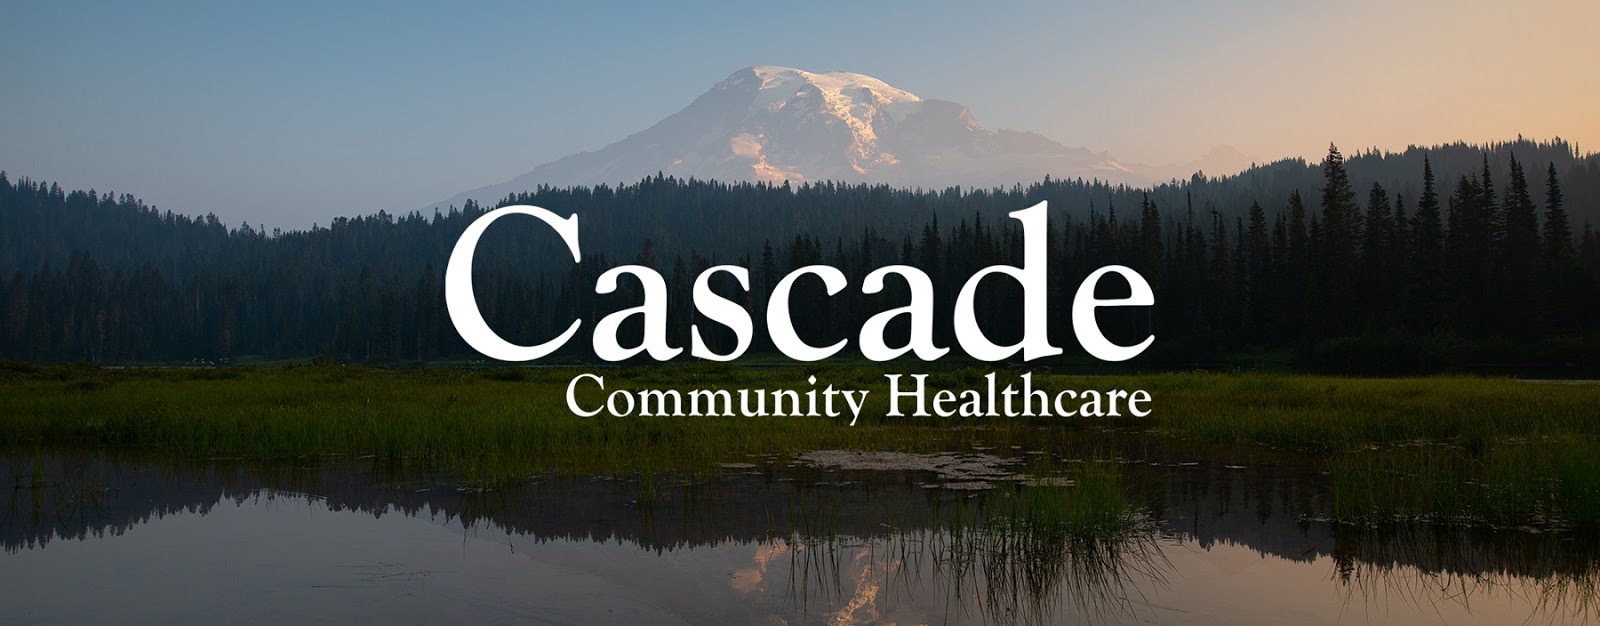 Cascade Community Healthcare